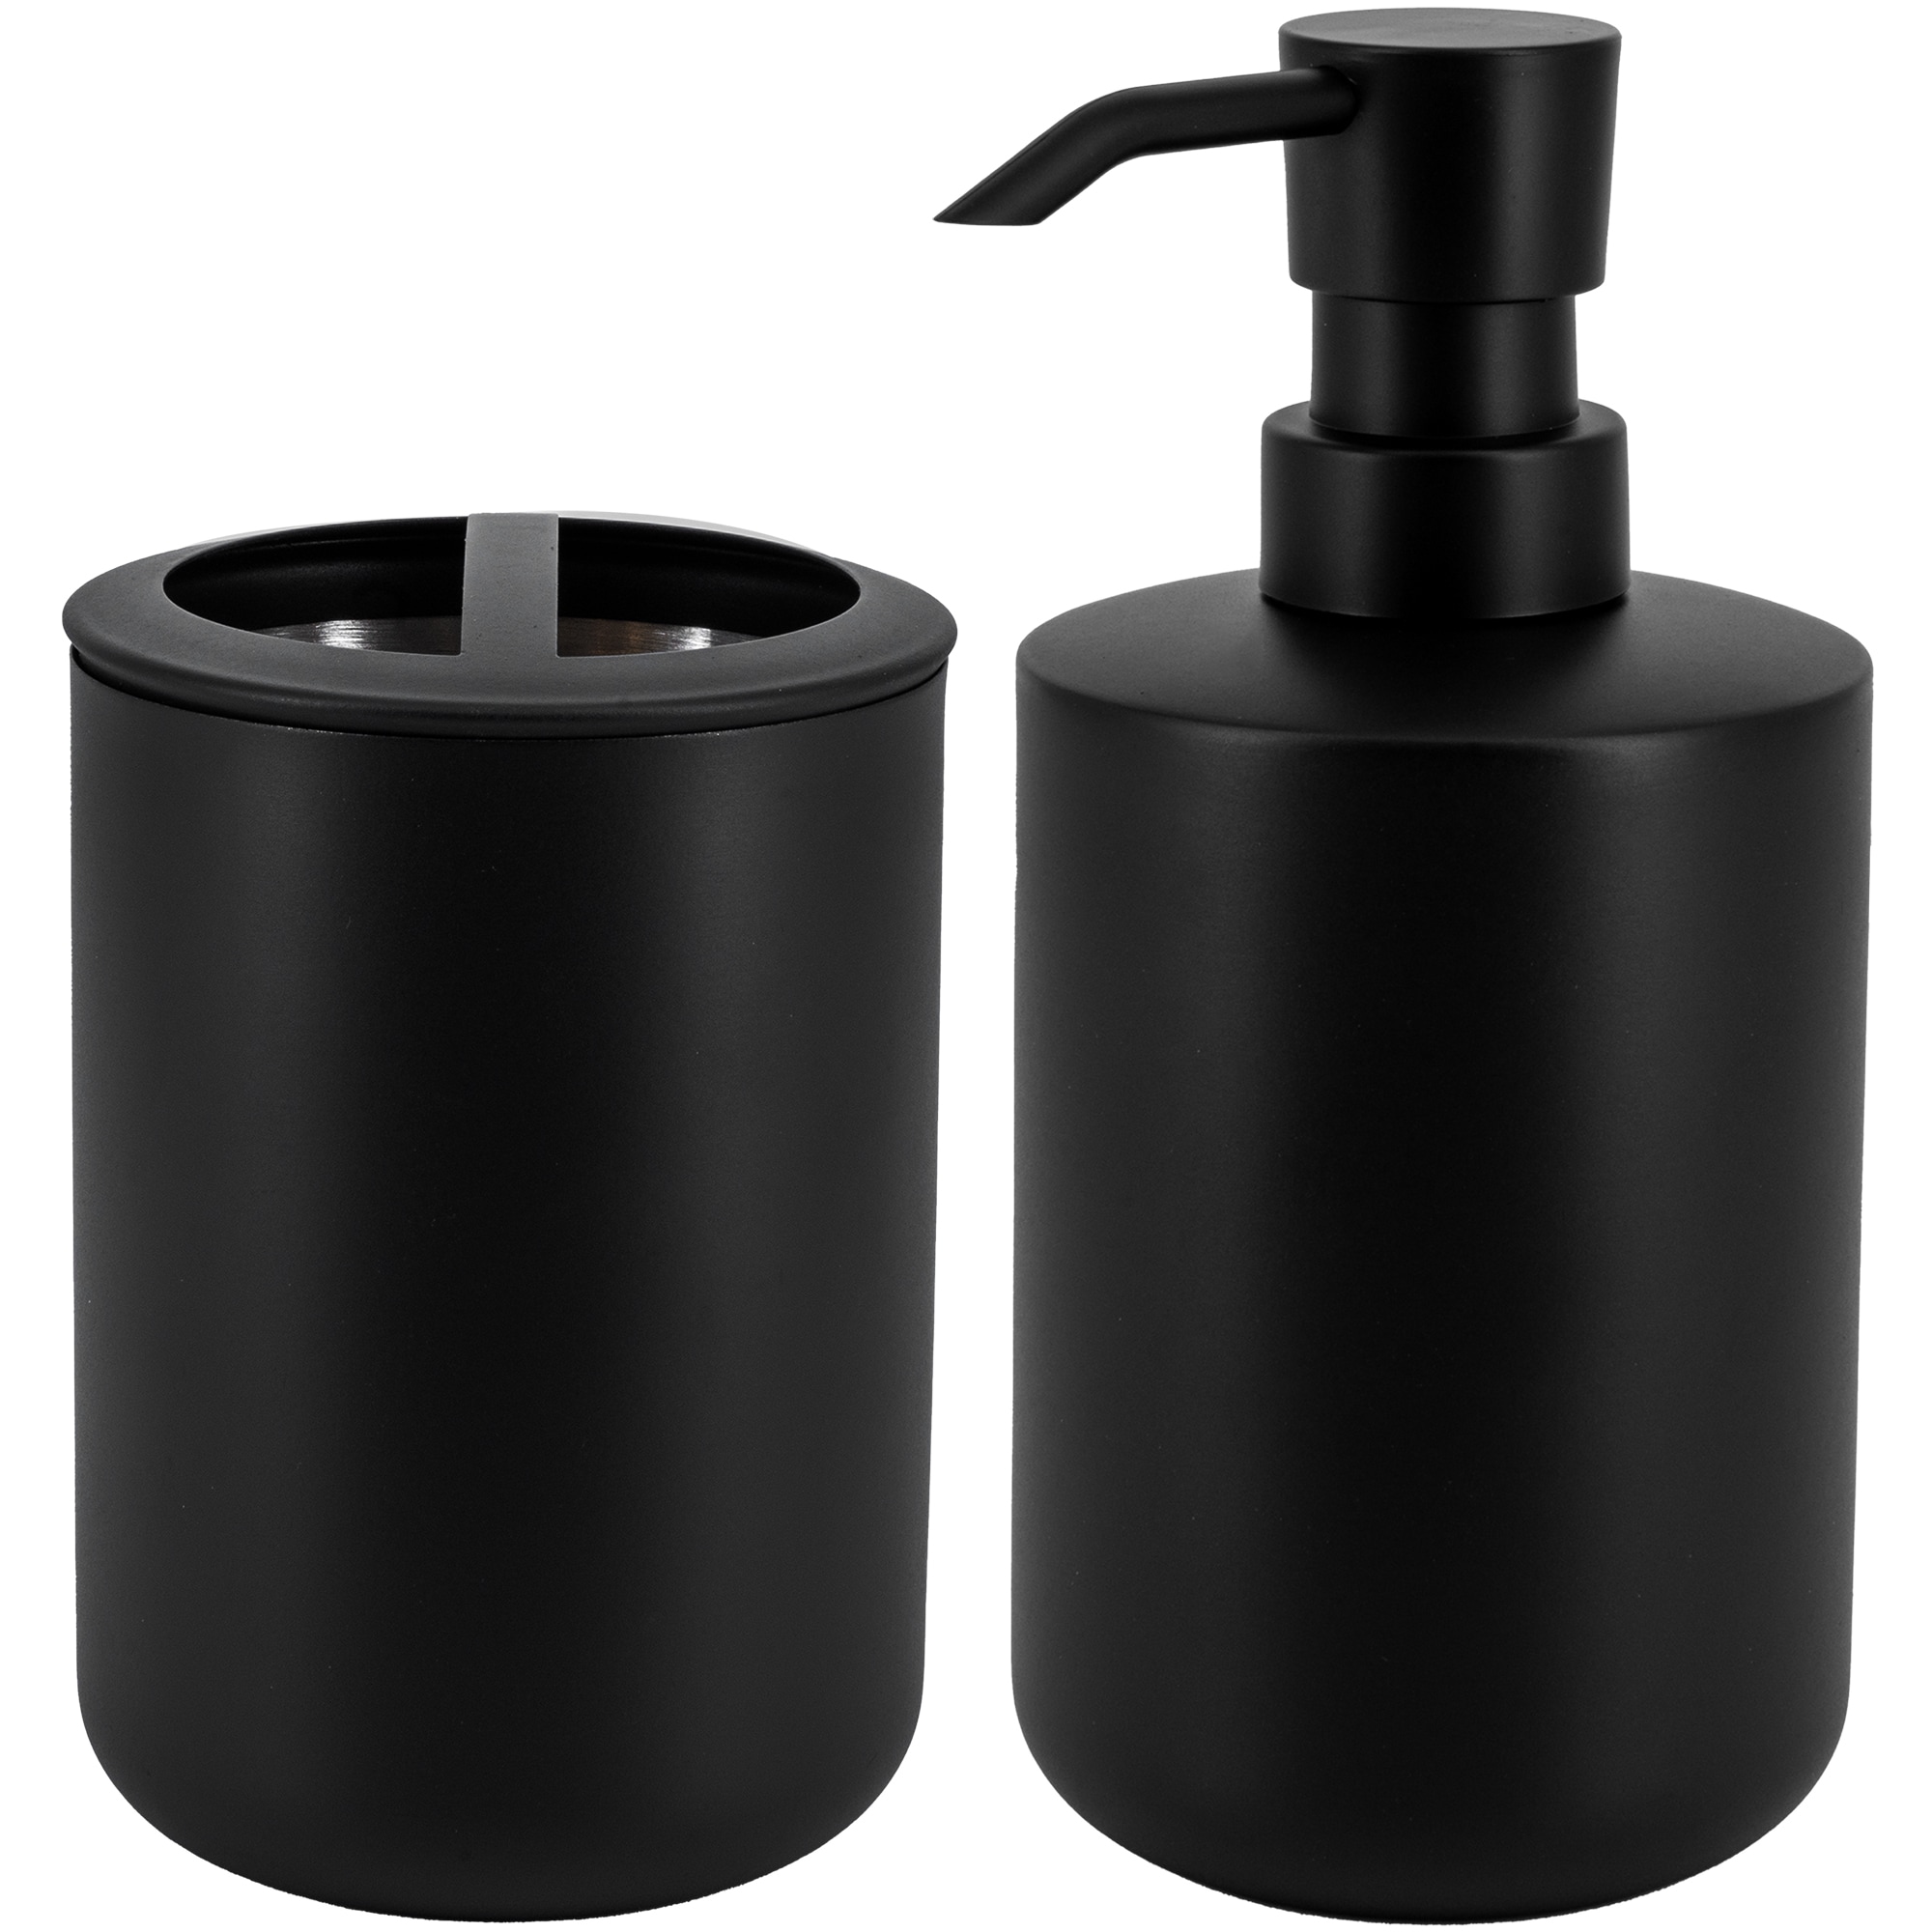 OXO Good Grips 15-Fluid Ounce Stainless Steel Dish Soap Dispenser